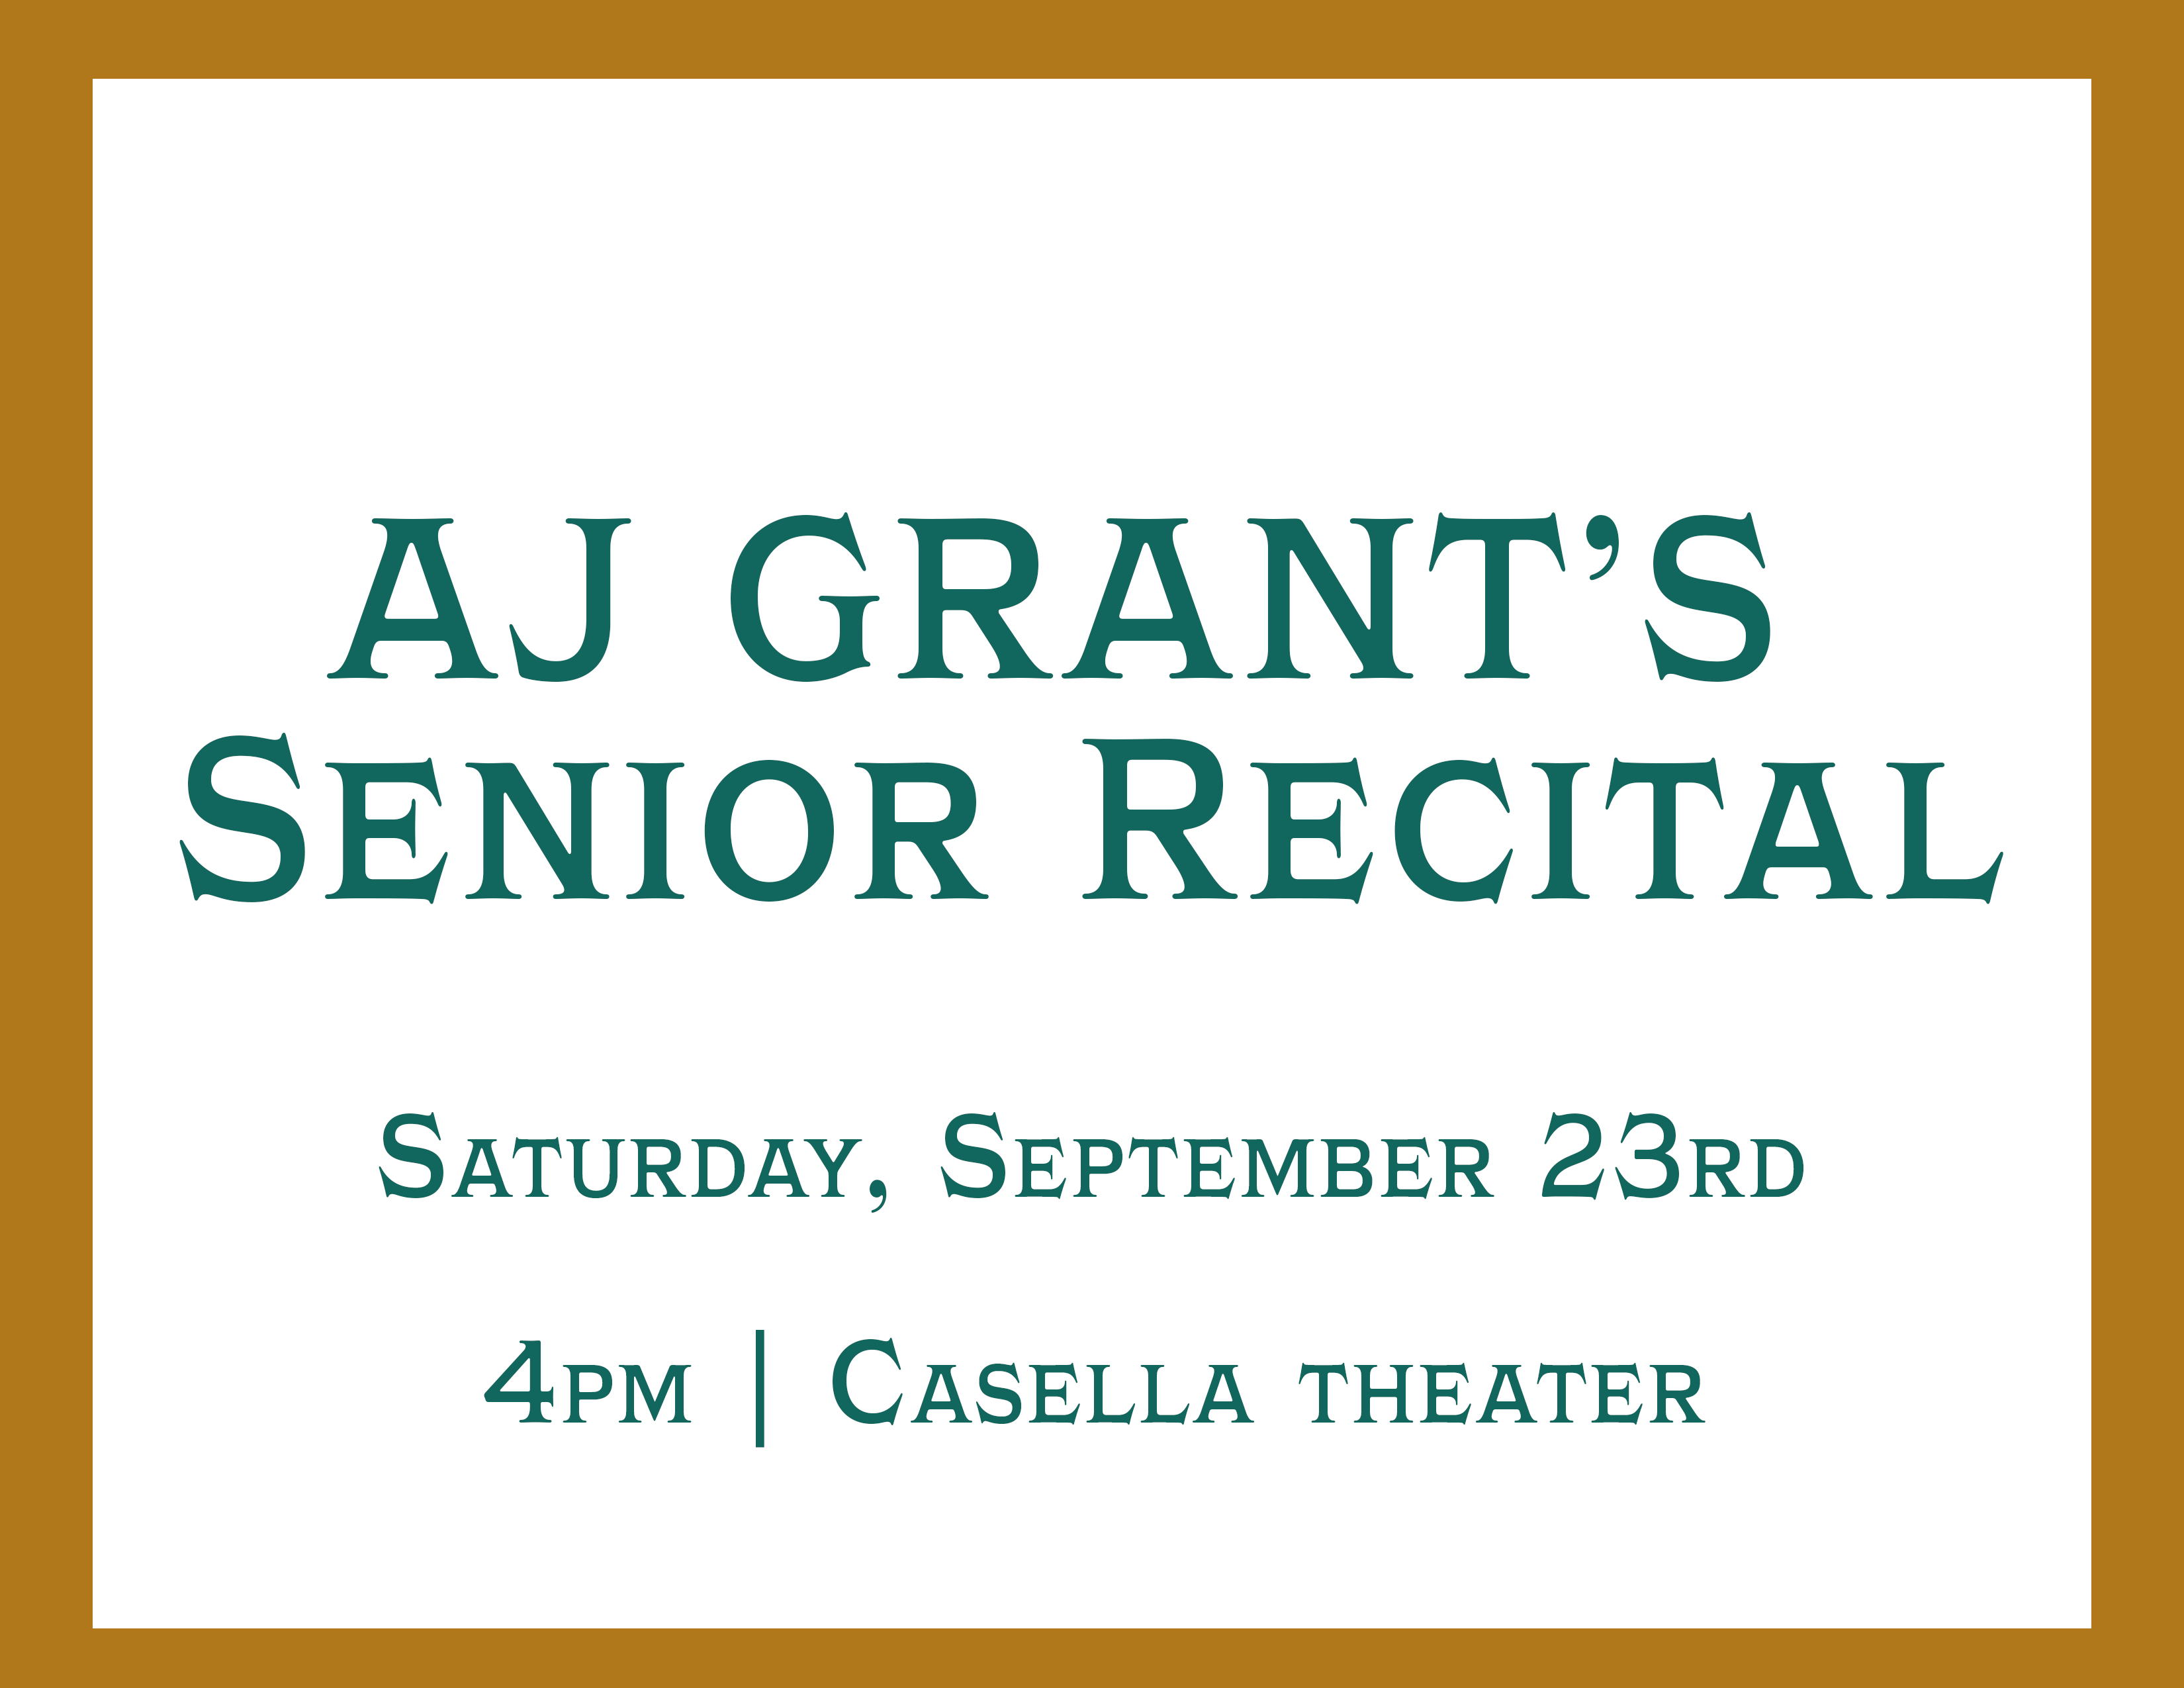 AJ Grant’s Senior Recital!